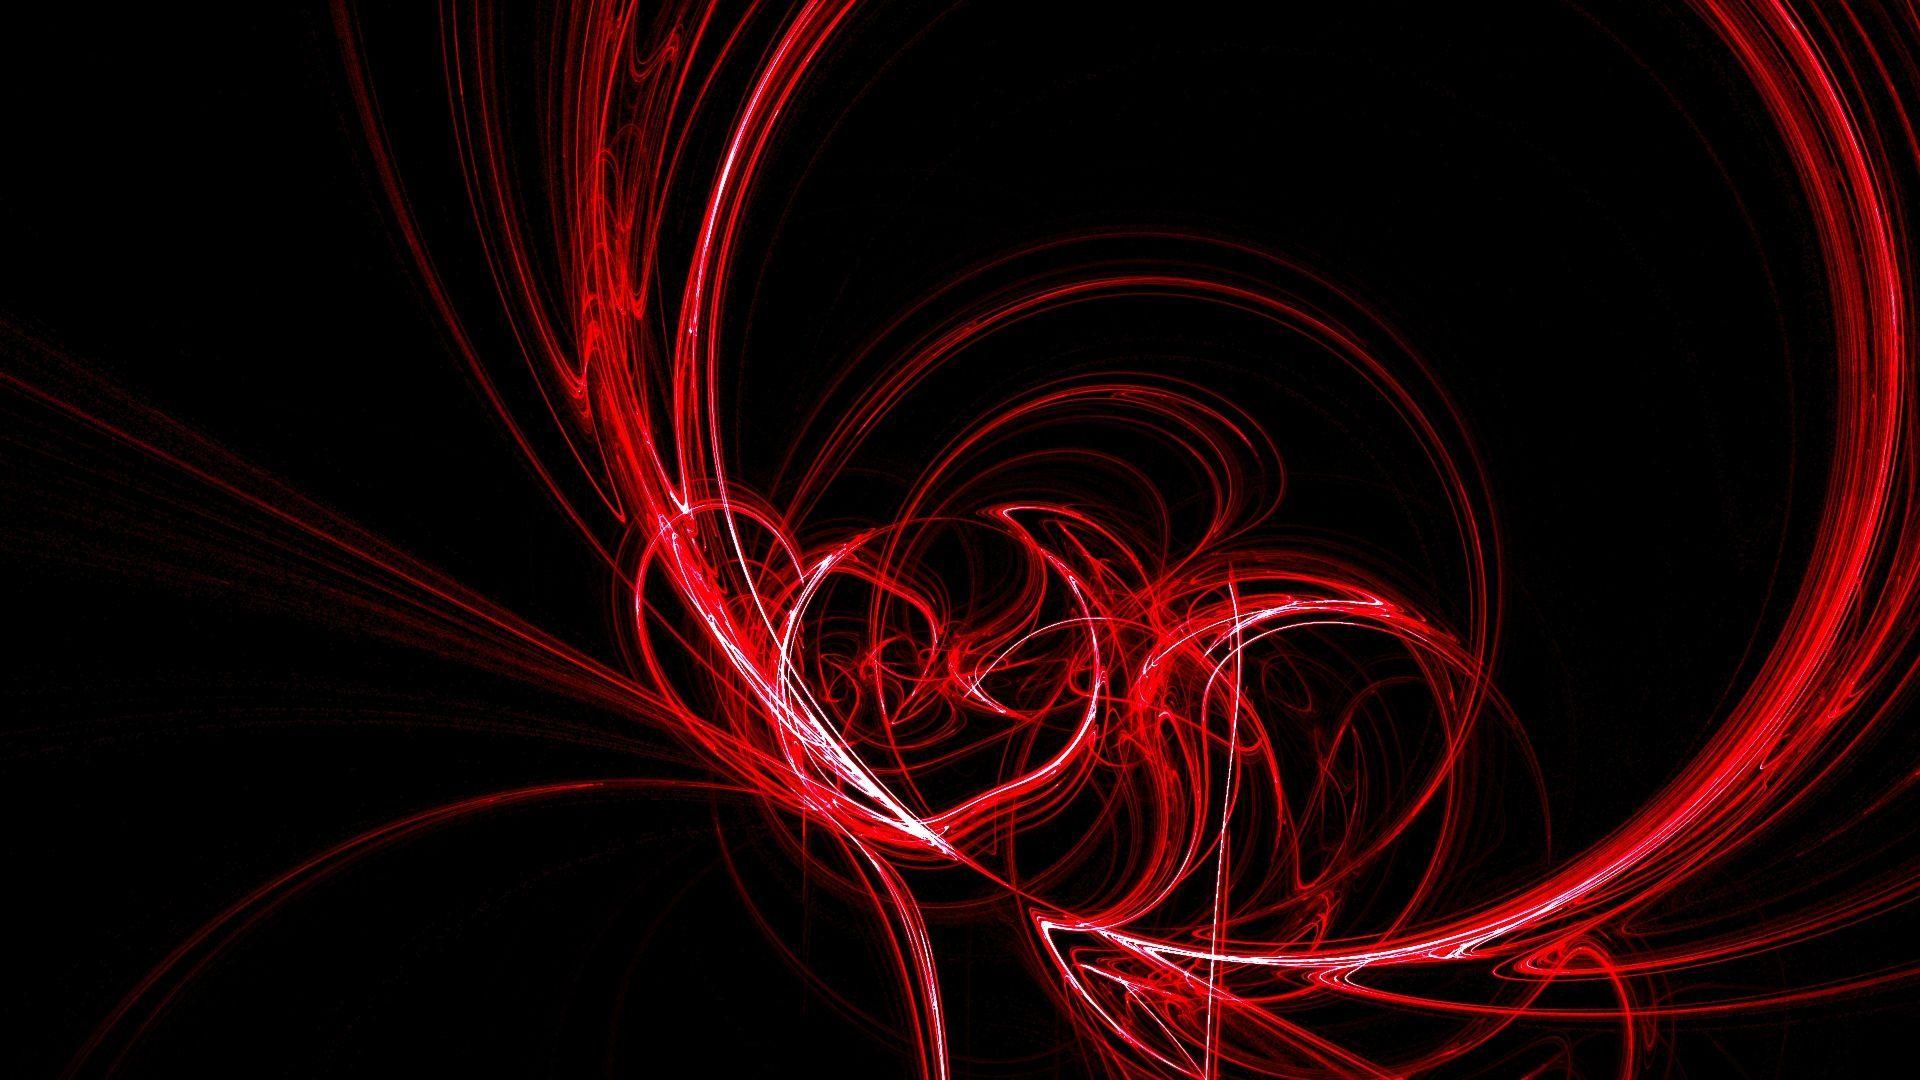 Red Abstract wallpaper for desktop. pc wallpaper